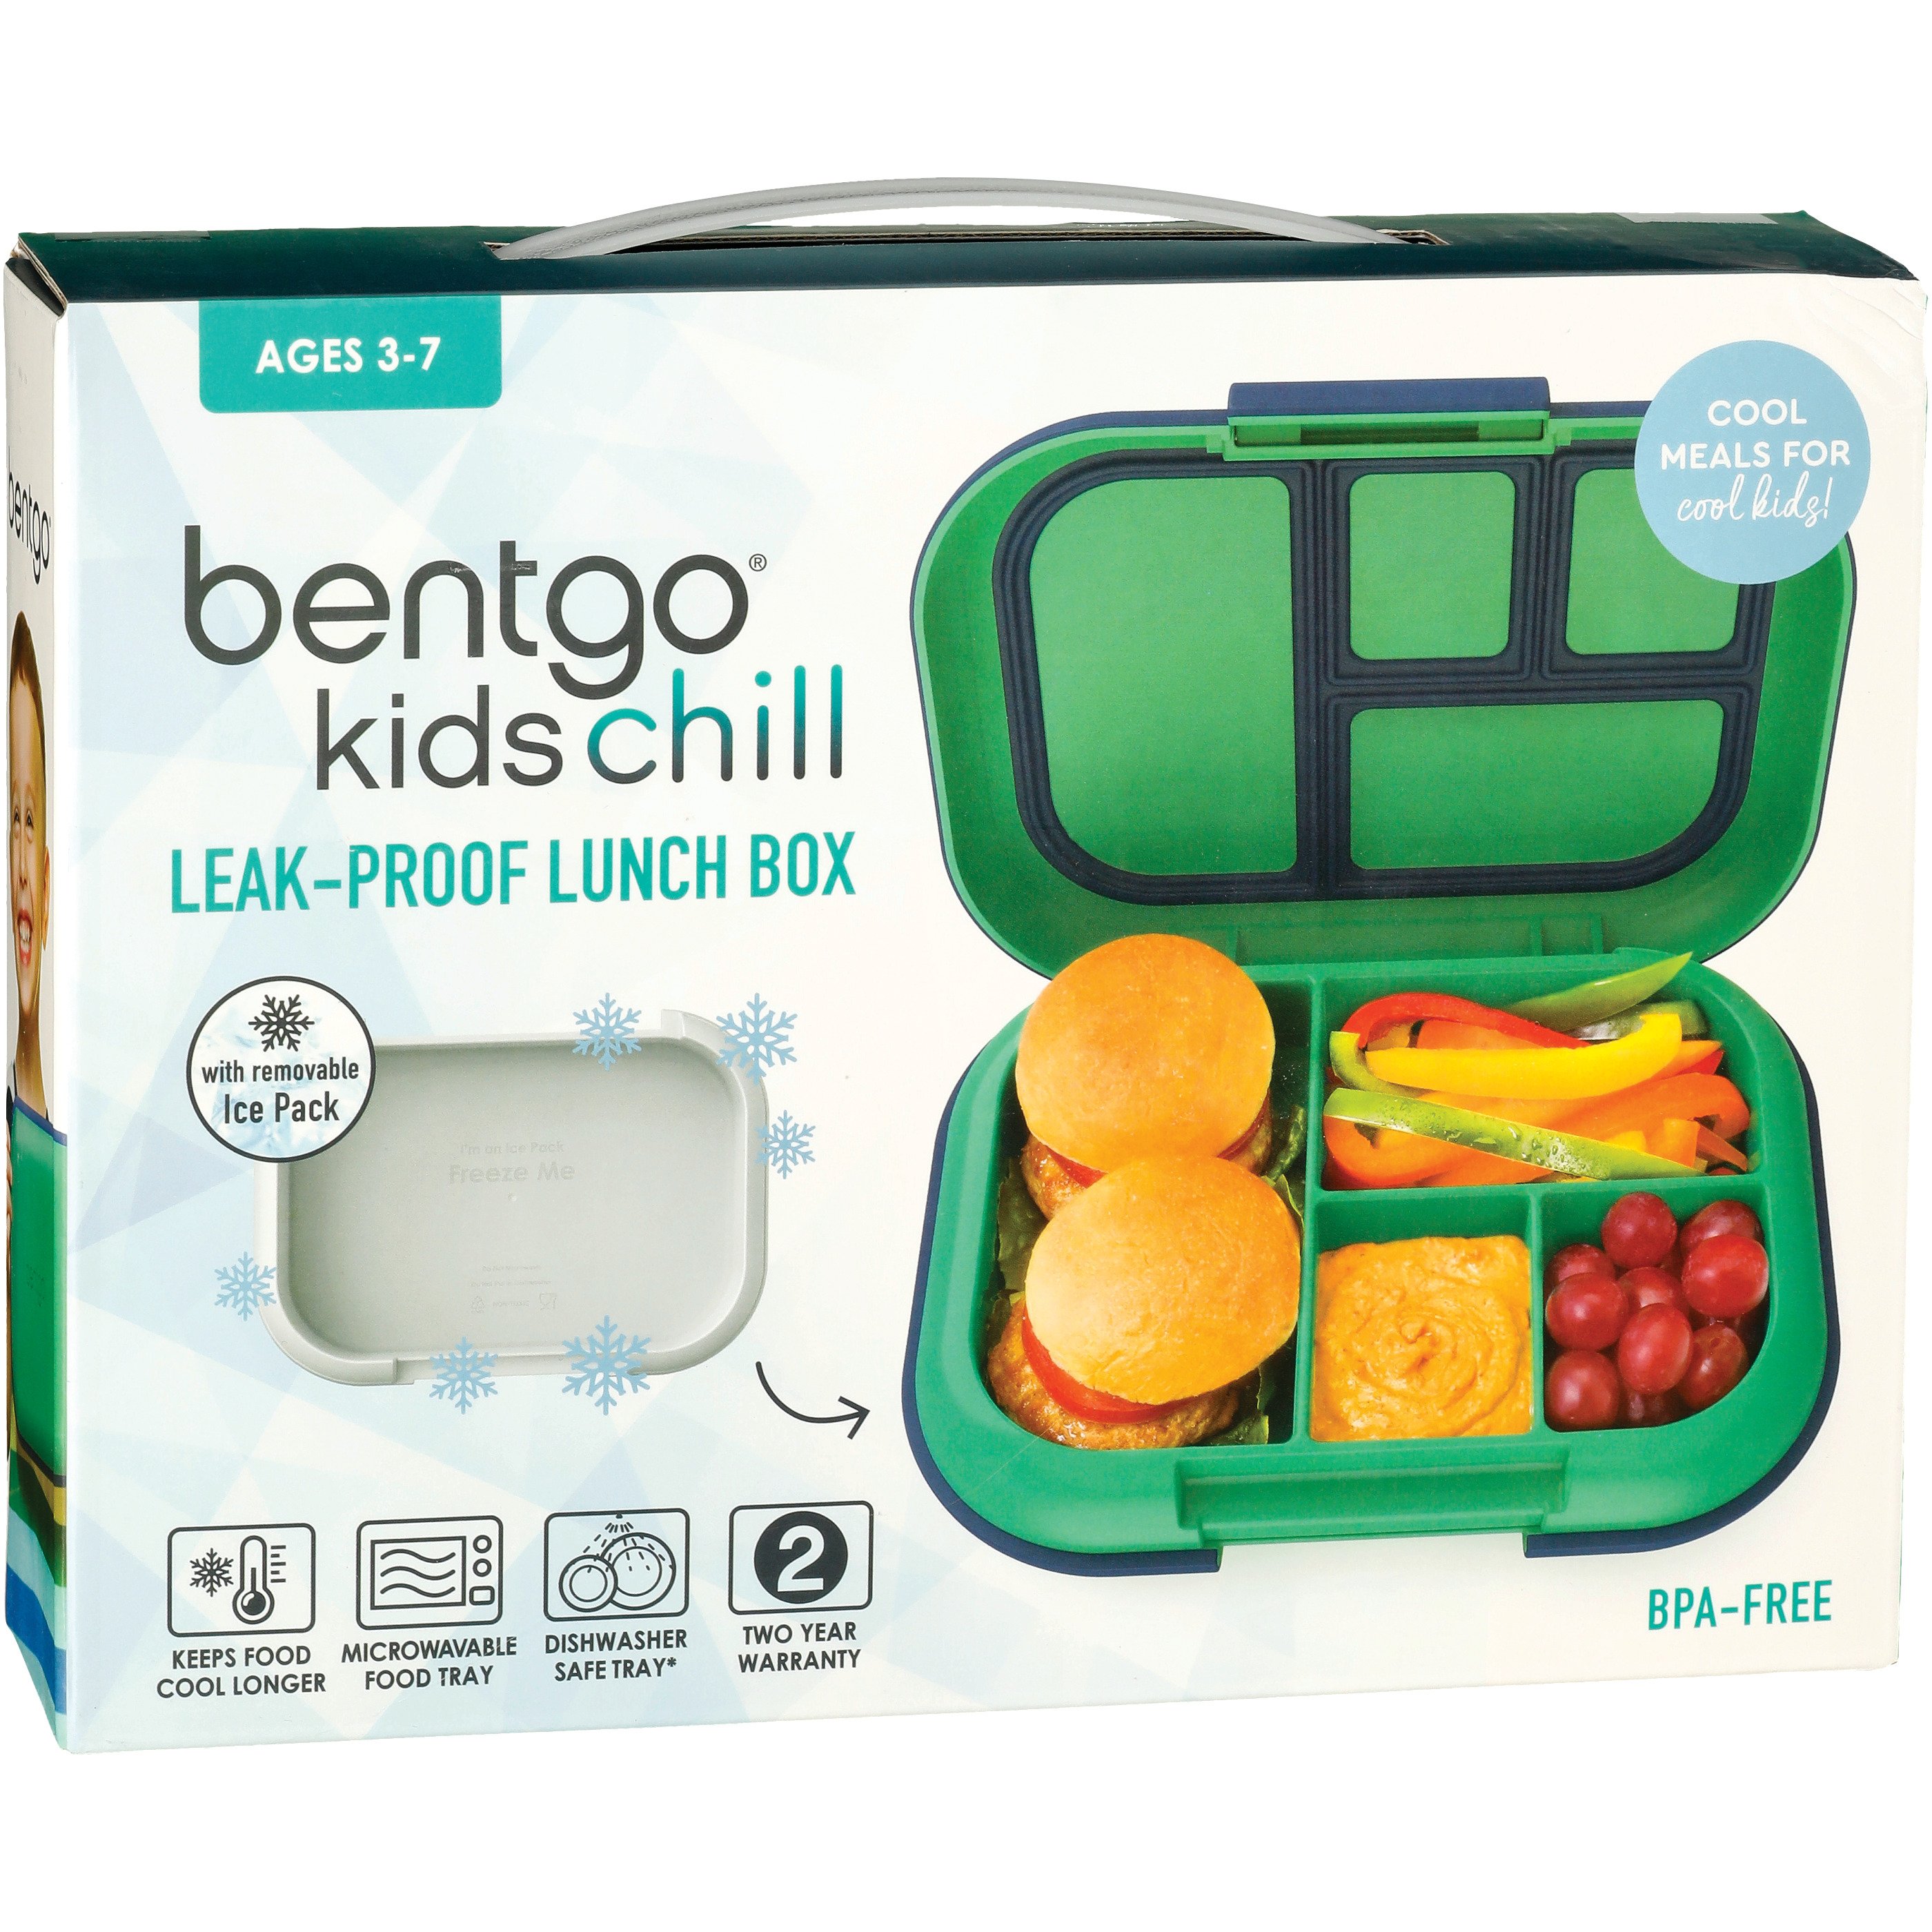 Bentgo Modern Lunch Box - Navy - Shop Food Storage at H-E-B